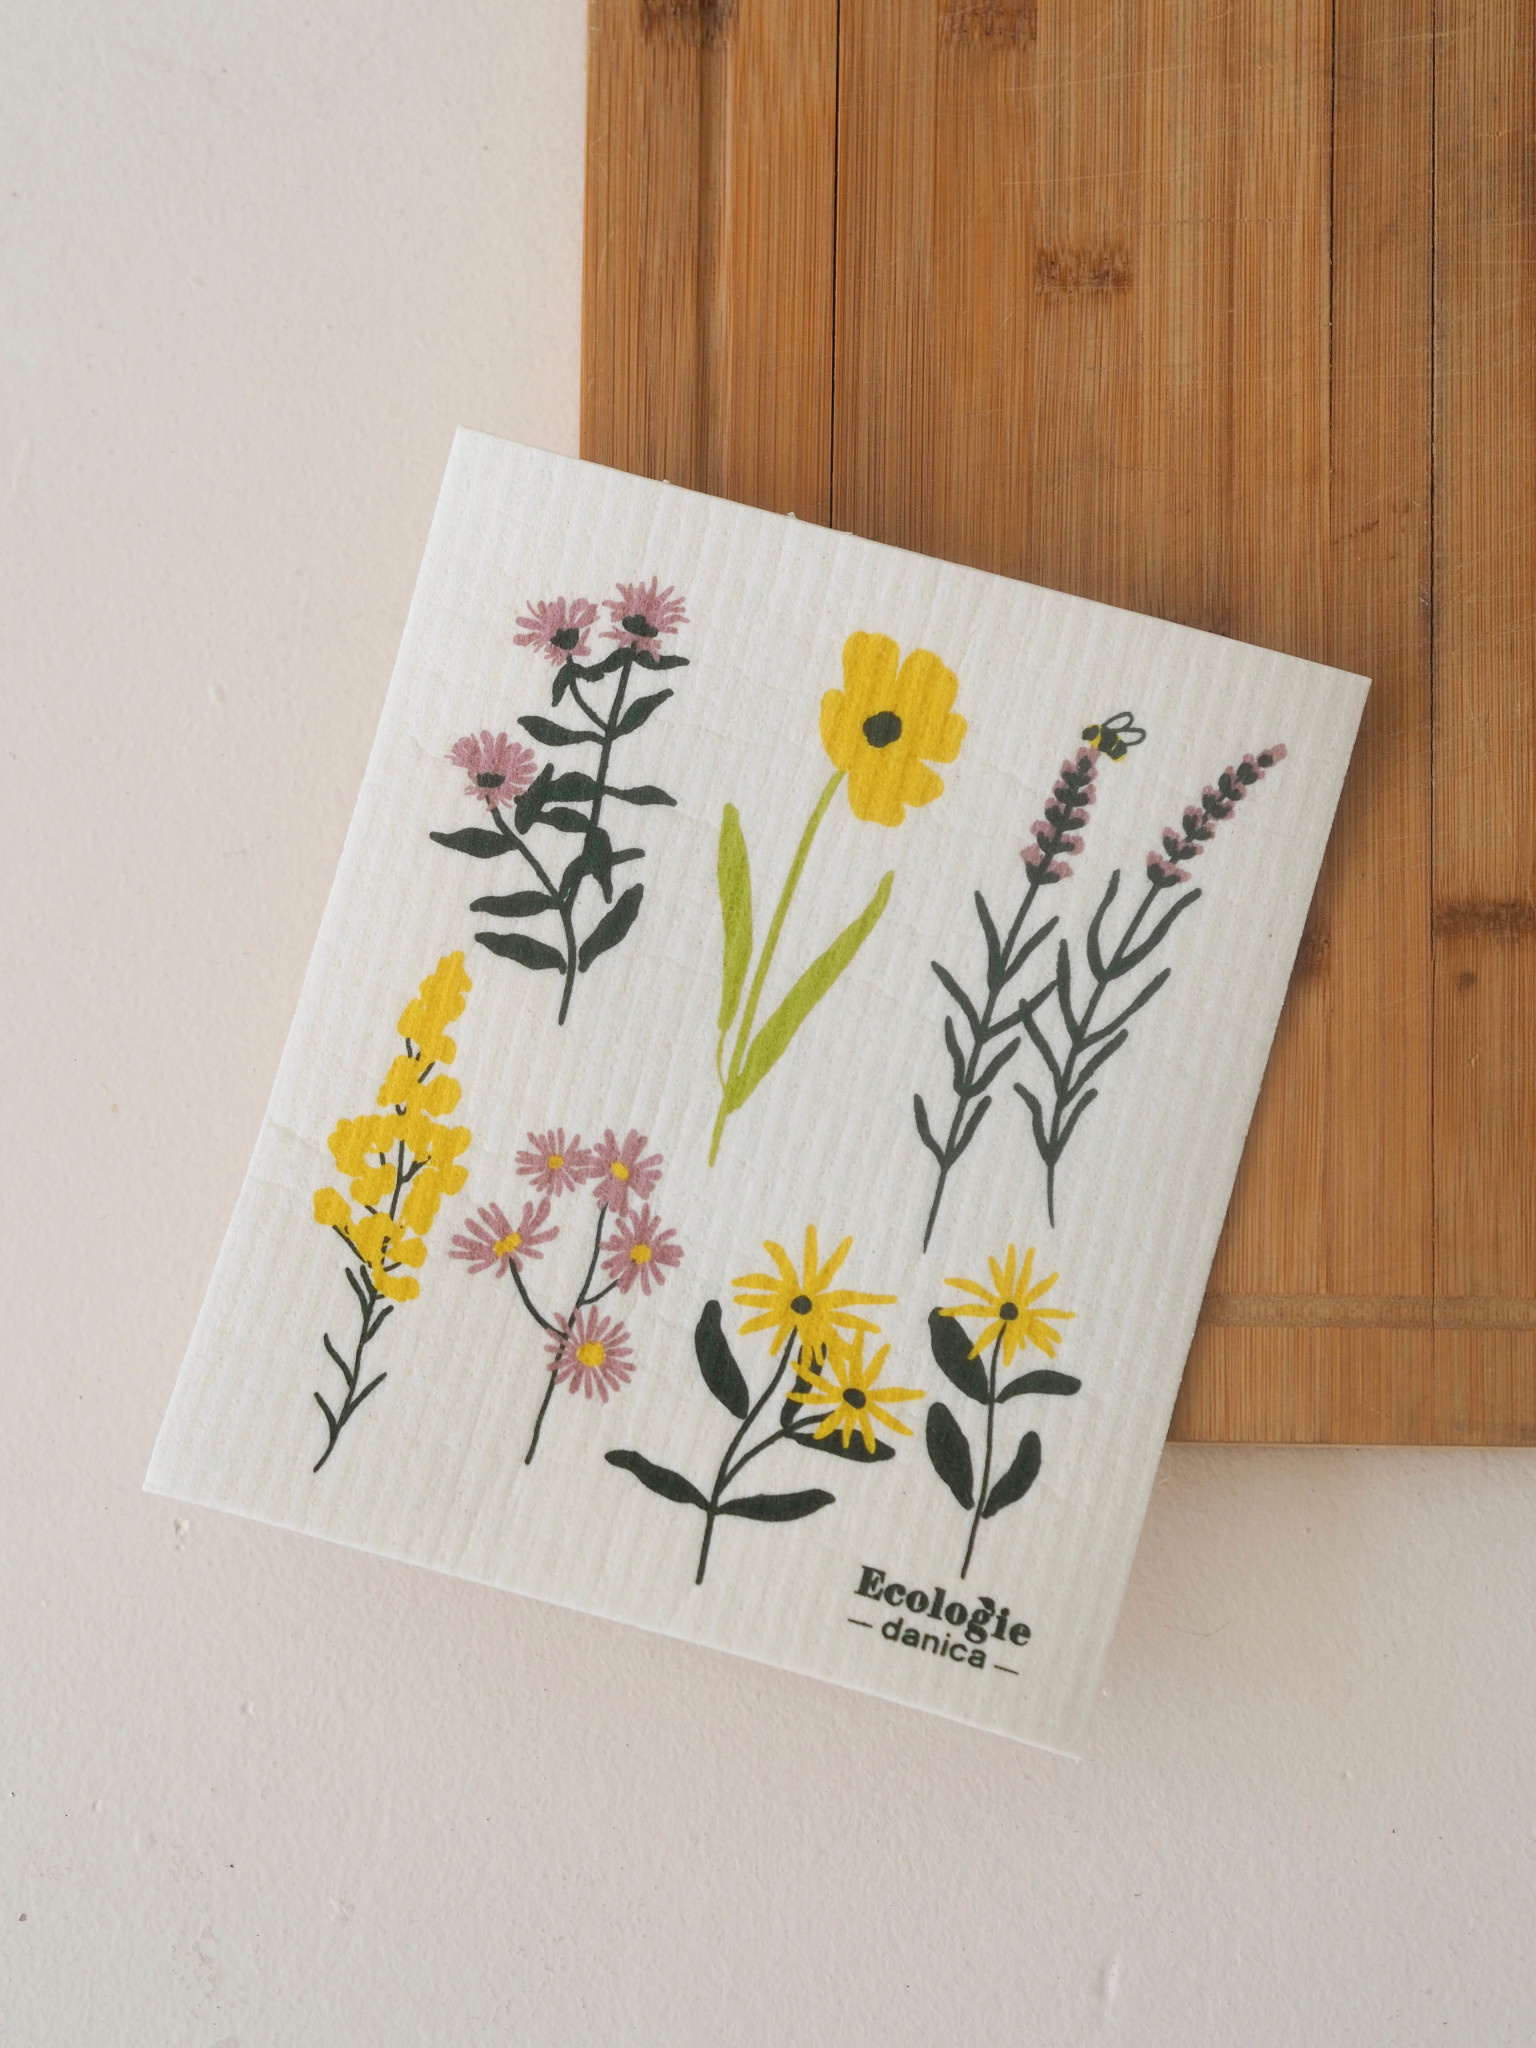 Lingette suédoise - Bees & Blooms